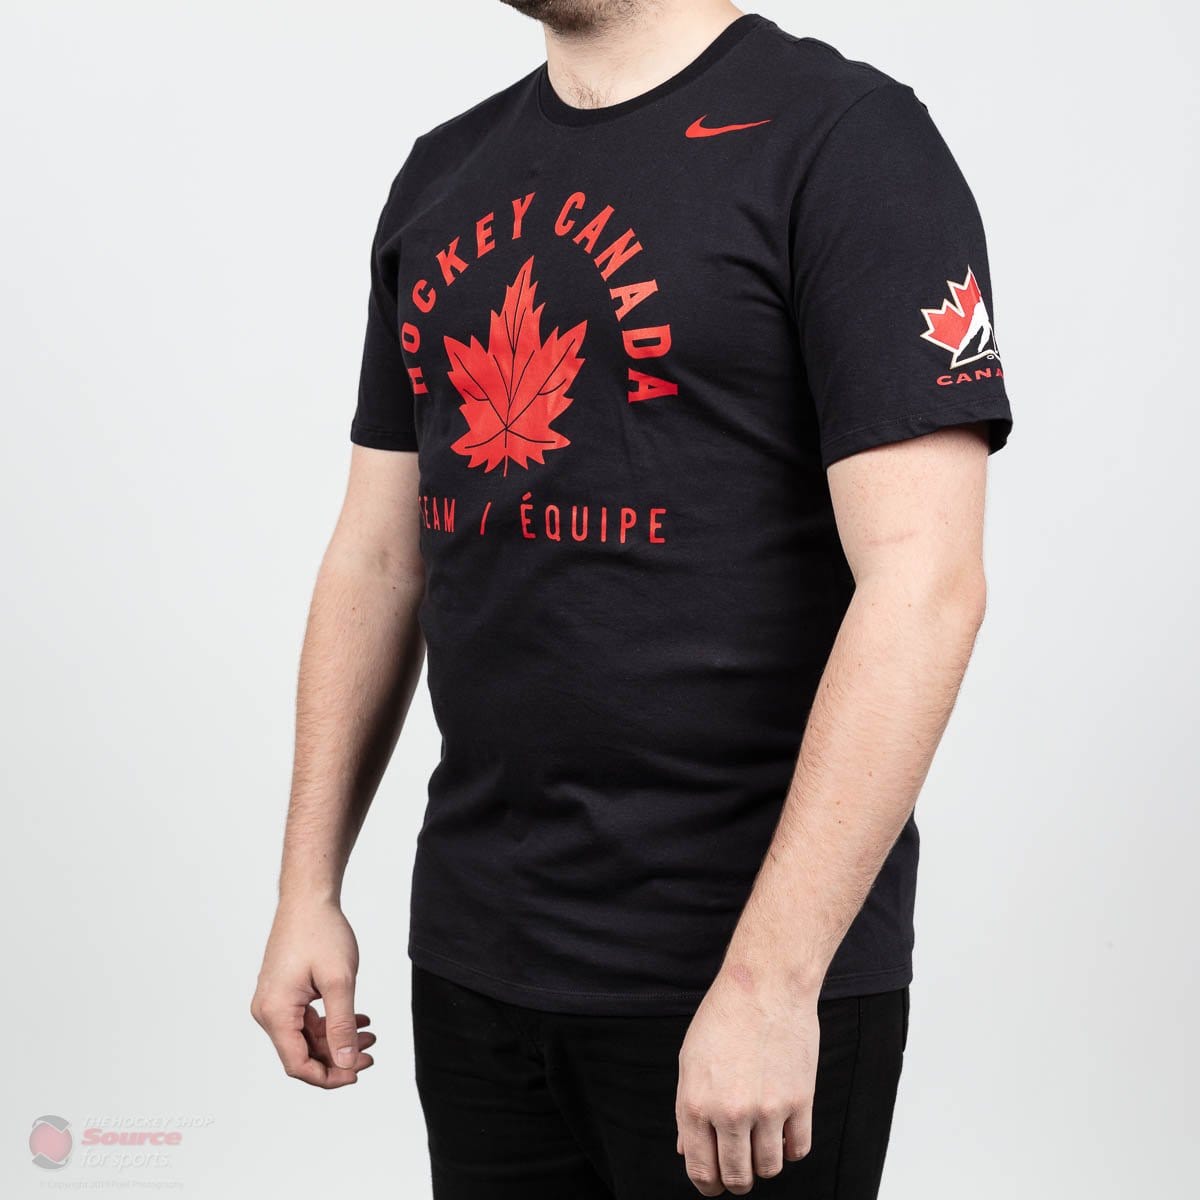 Hockey Canada Nike Core Mens Shirt